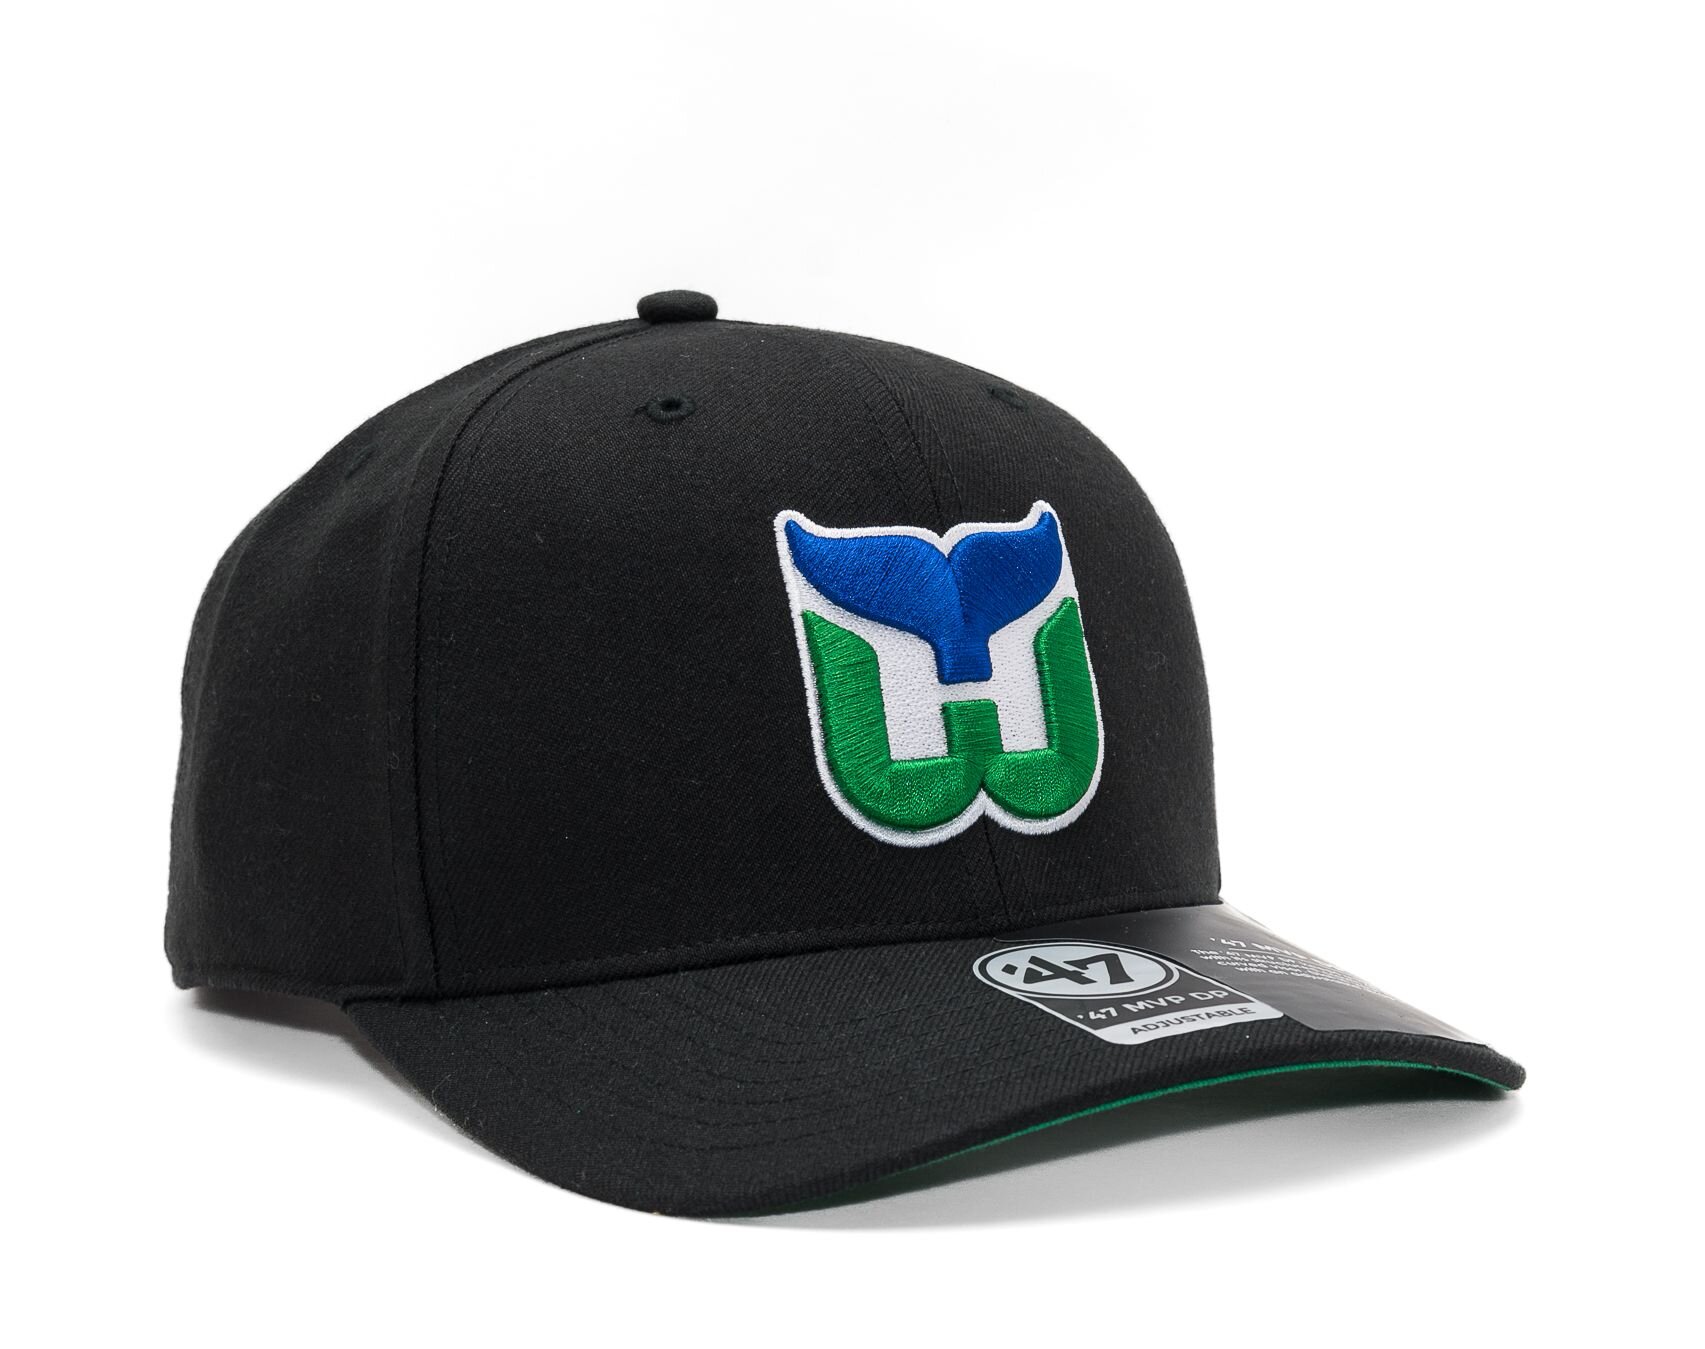 Hartford Whalers NHL Mitchell & Ness Snapback Hat